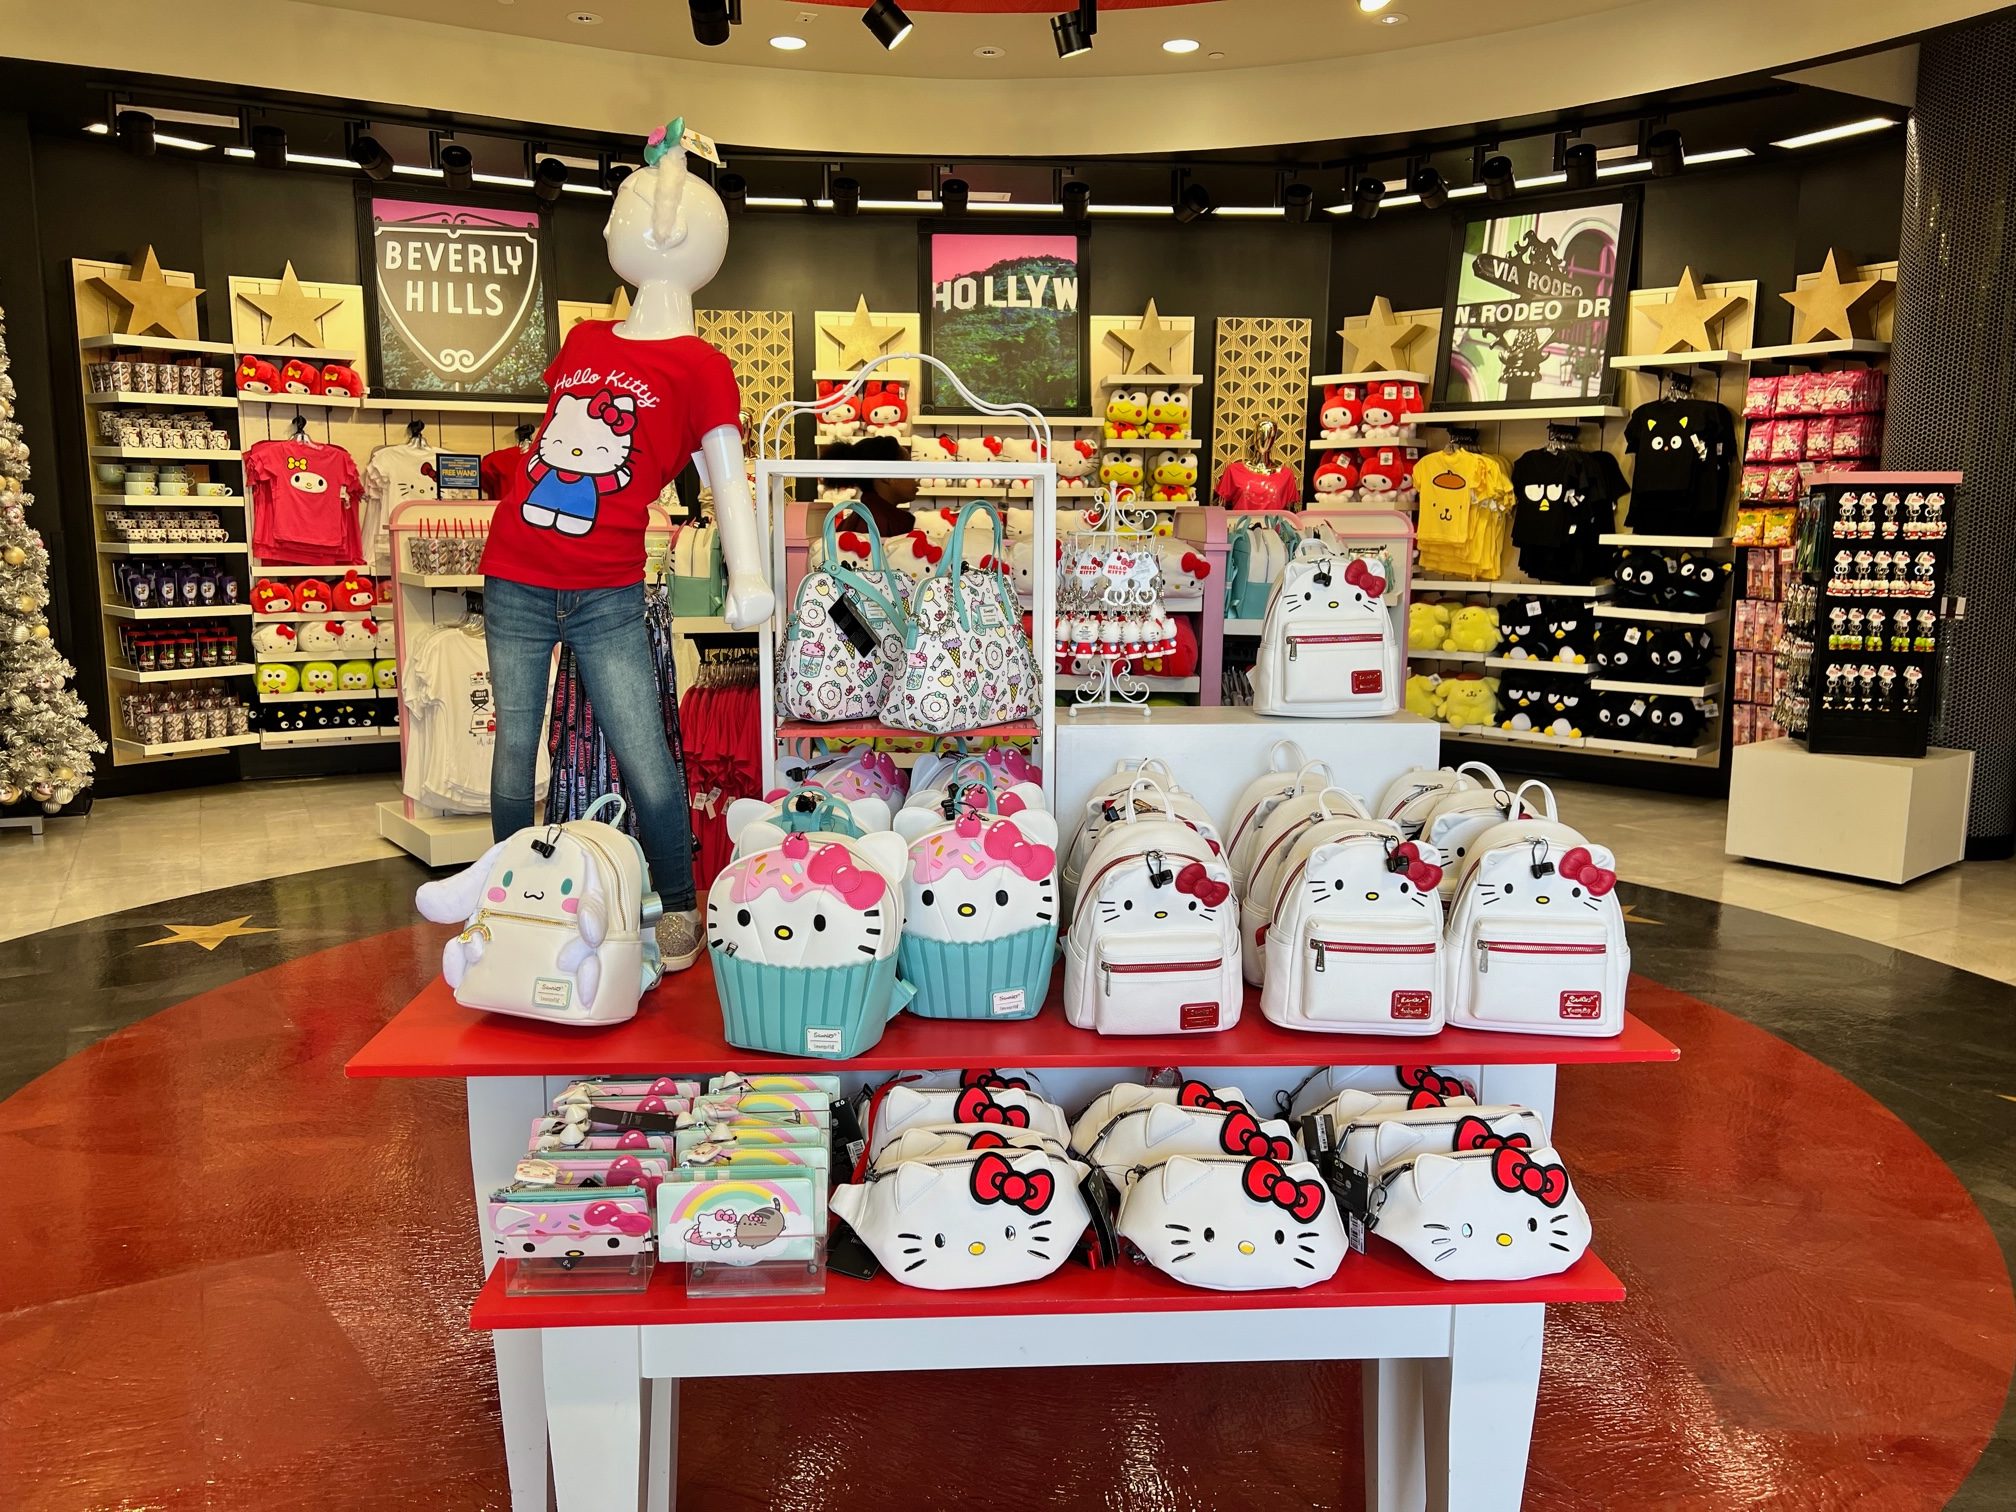 Hello Kitty Store at Universal Studios Orlando  New Updated 2022 Merch Sanrio  Hello Kitty & Friends 